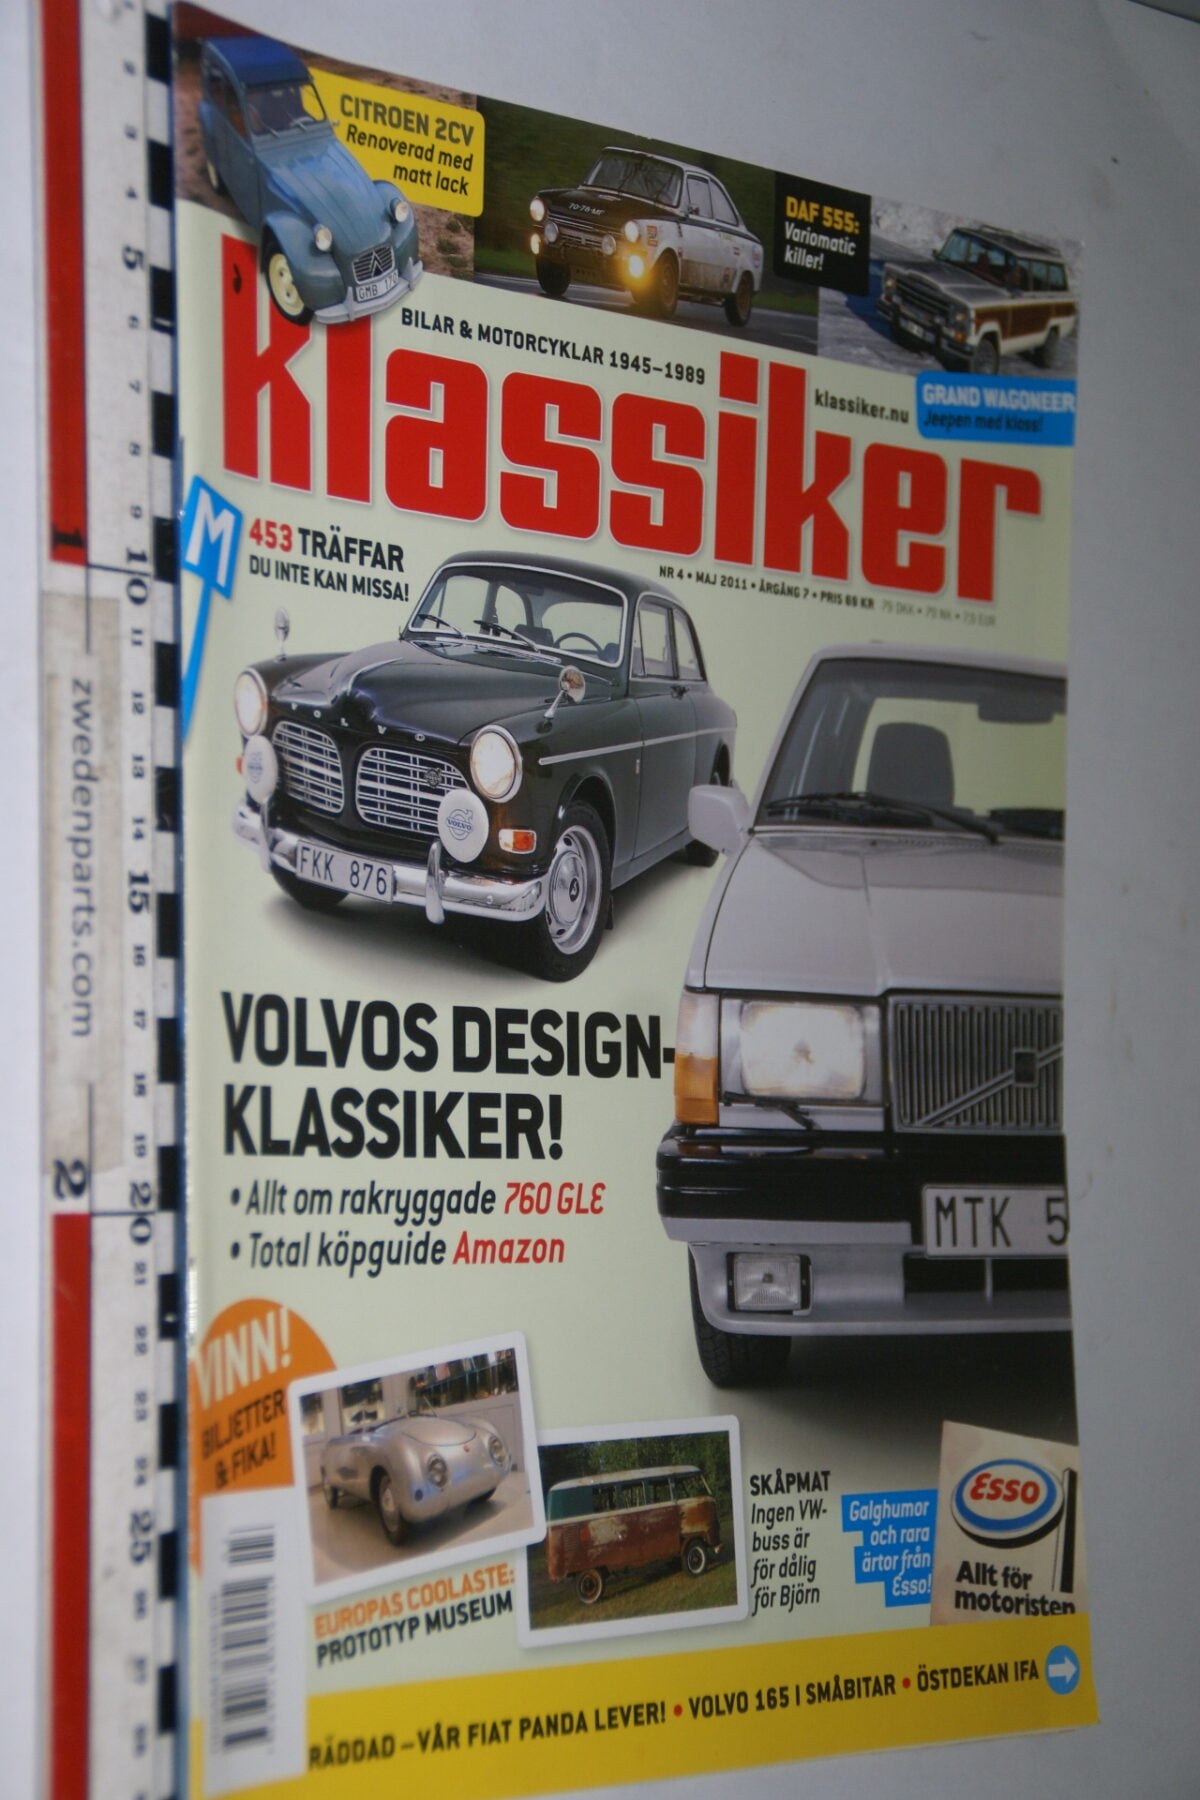 DSC00576 2011 mei tijdschrift Klassiker Volvo design Amazon 760GLE DAF 555 Svensk-640ecc71